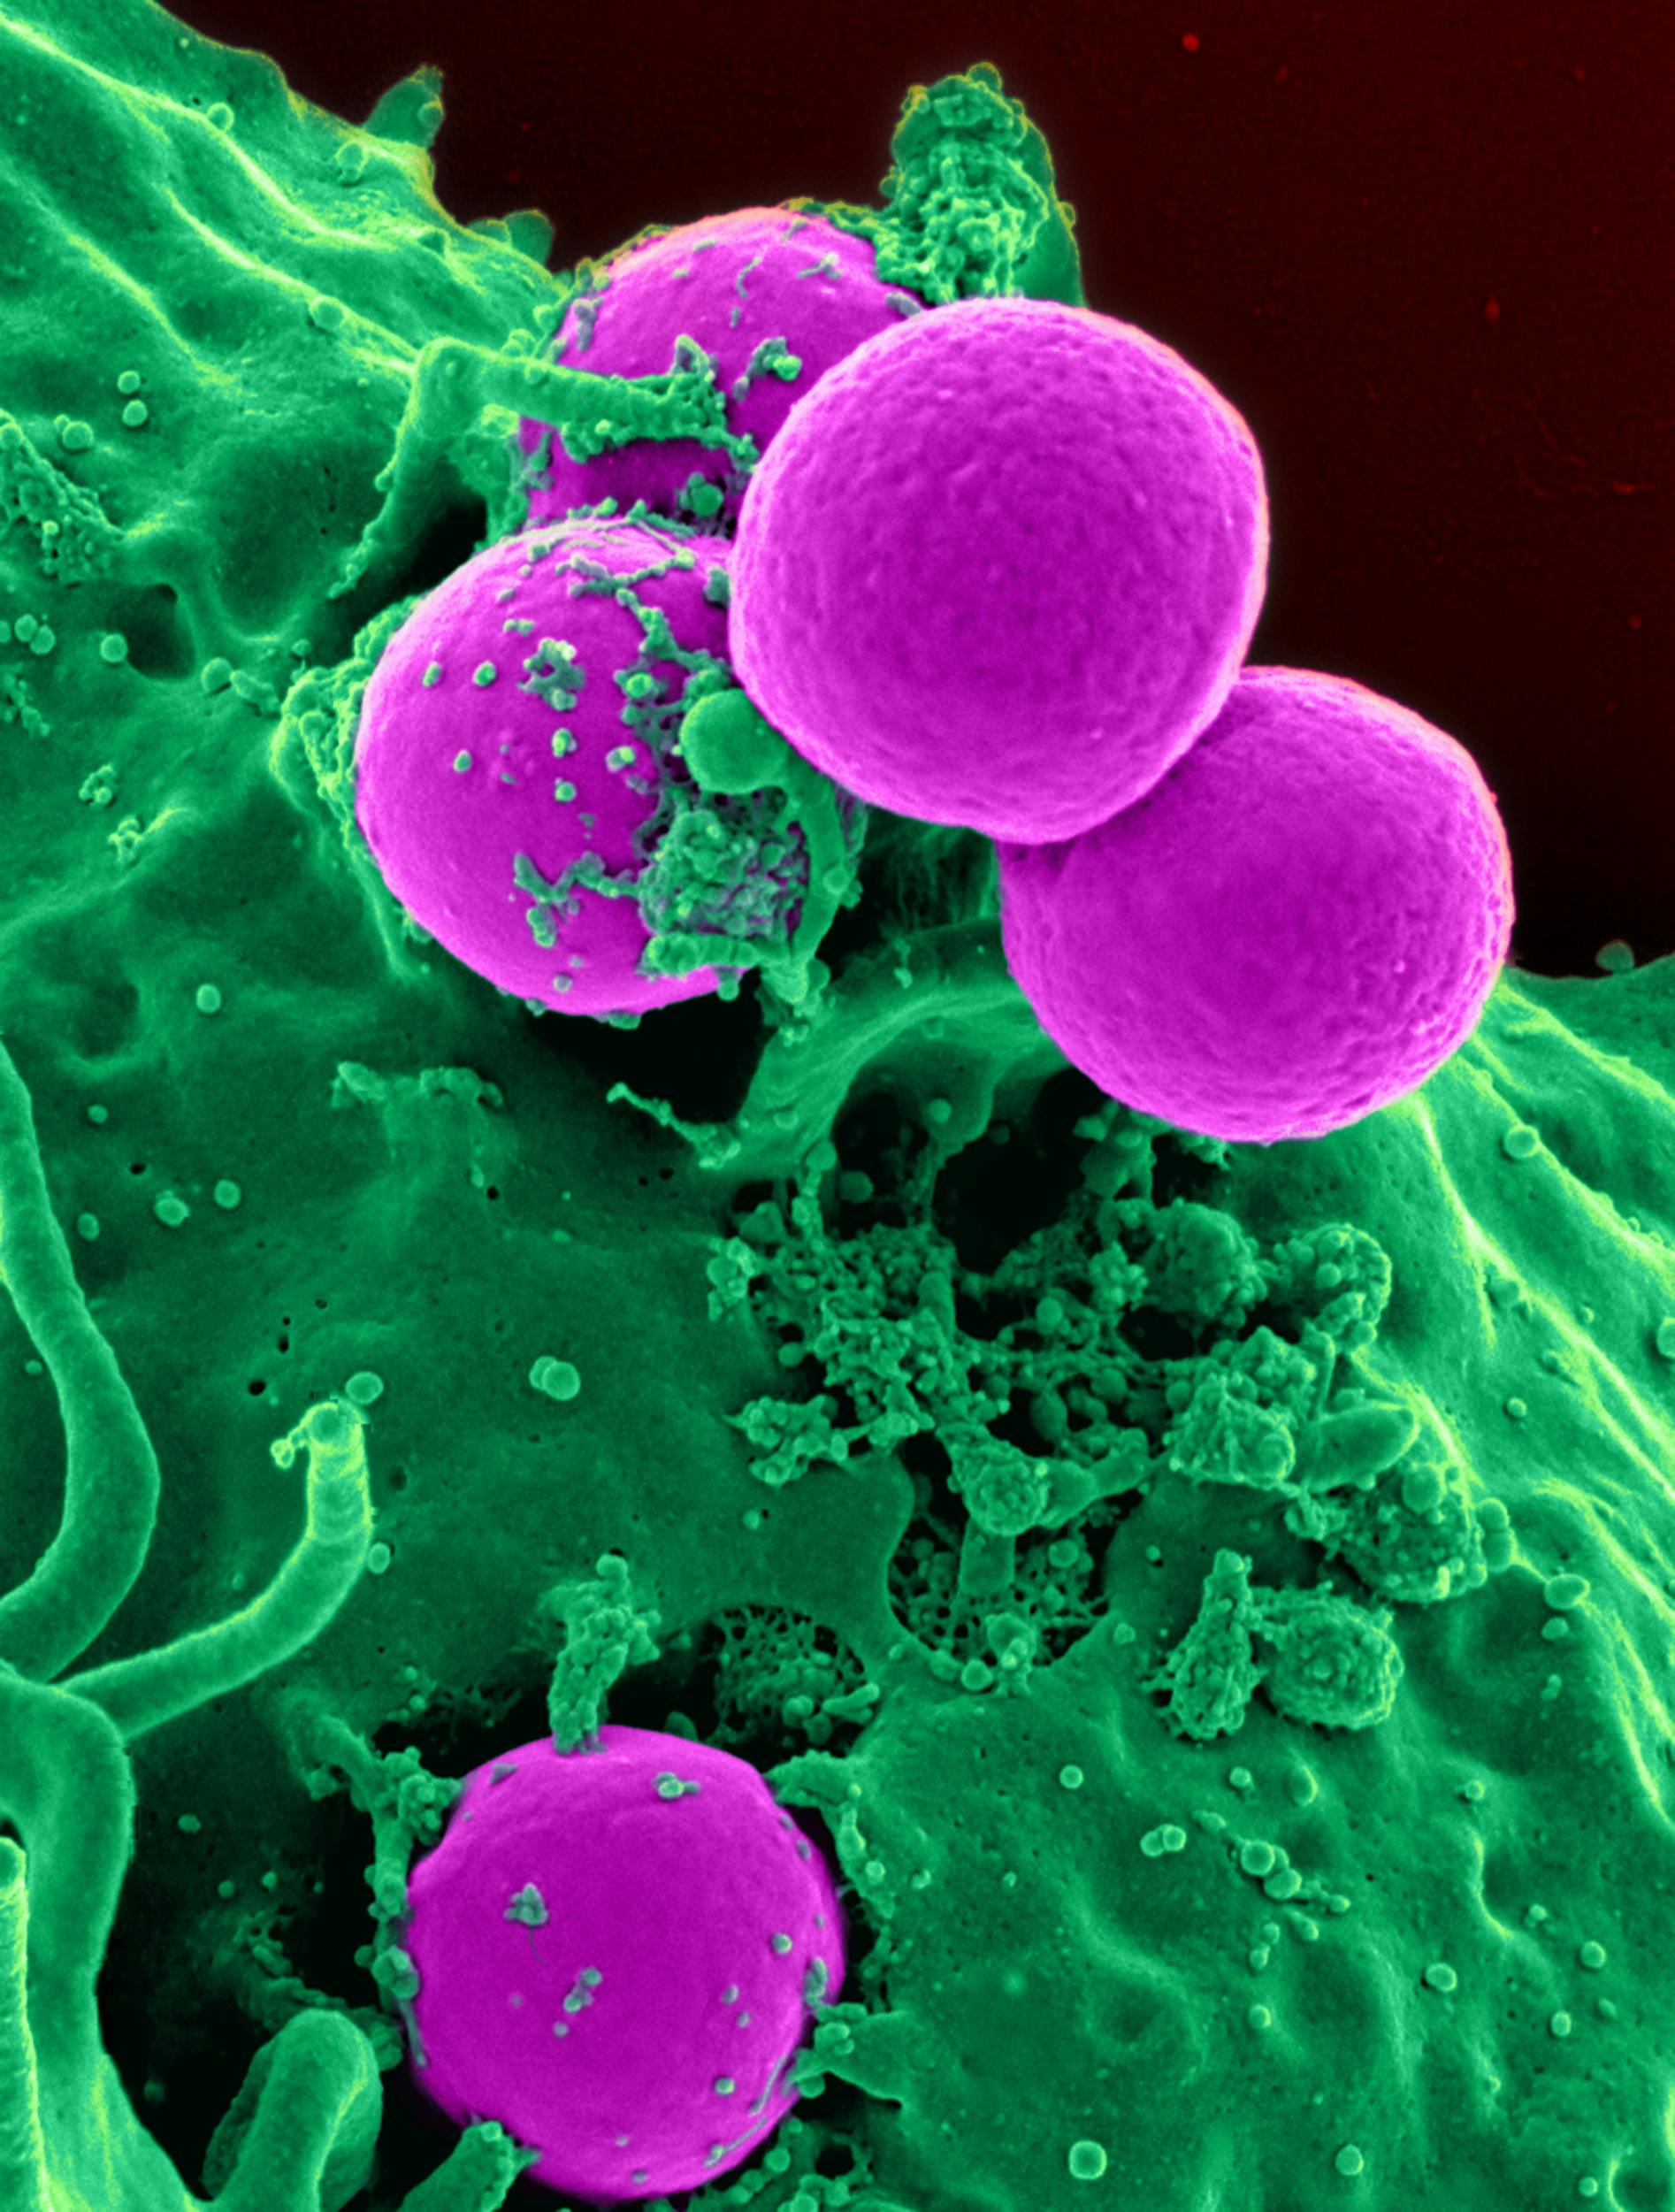 Virusbacteria wallpaper stock illustration Illustration of molecules   92884955